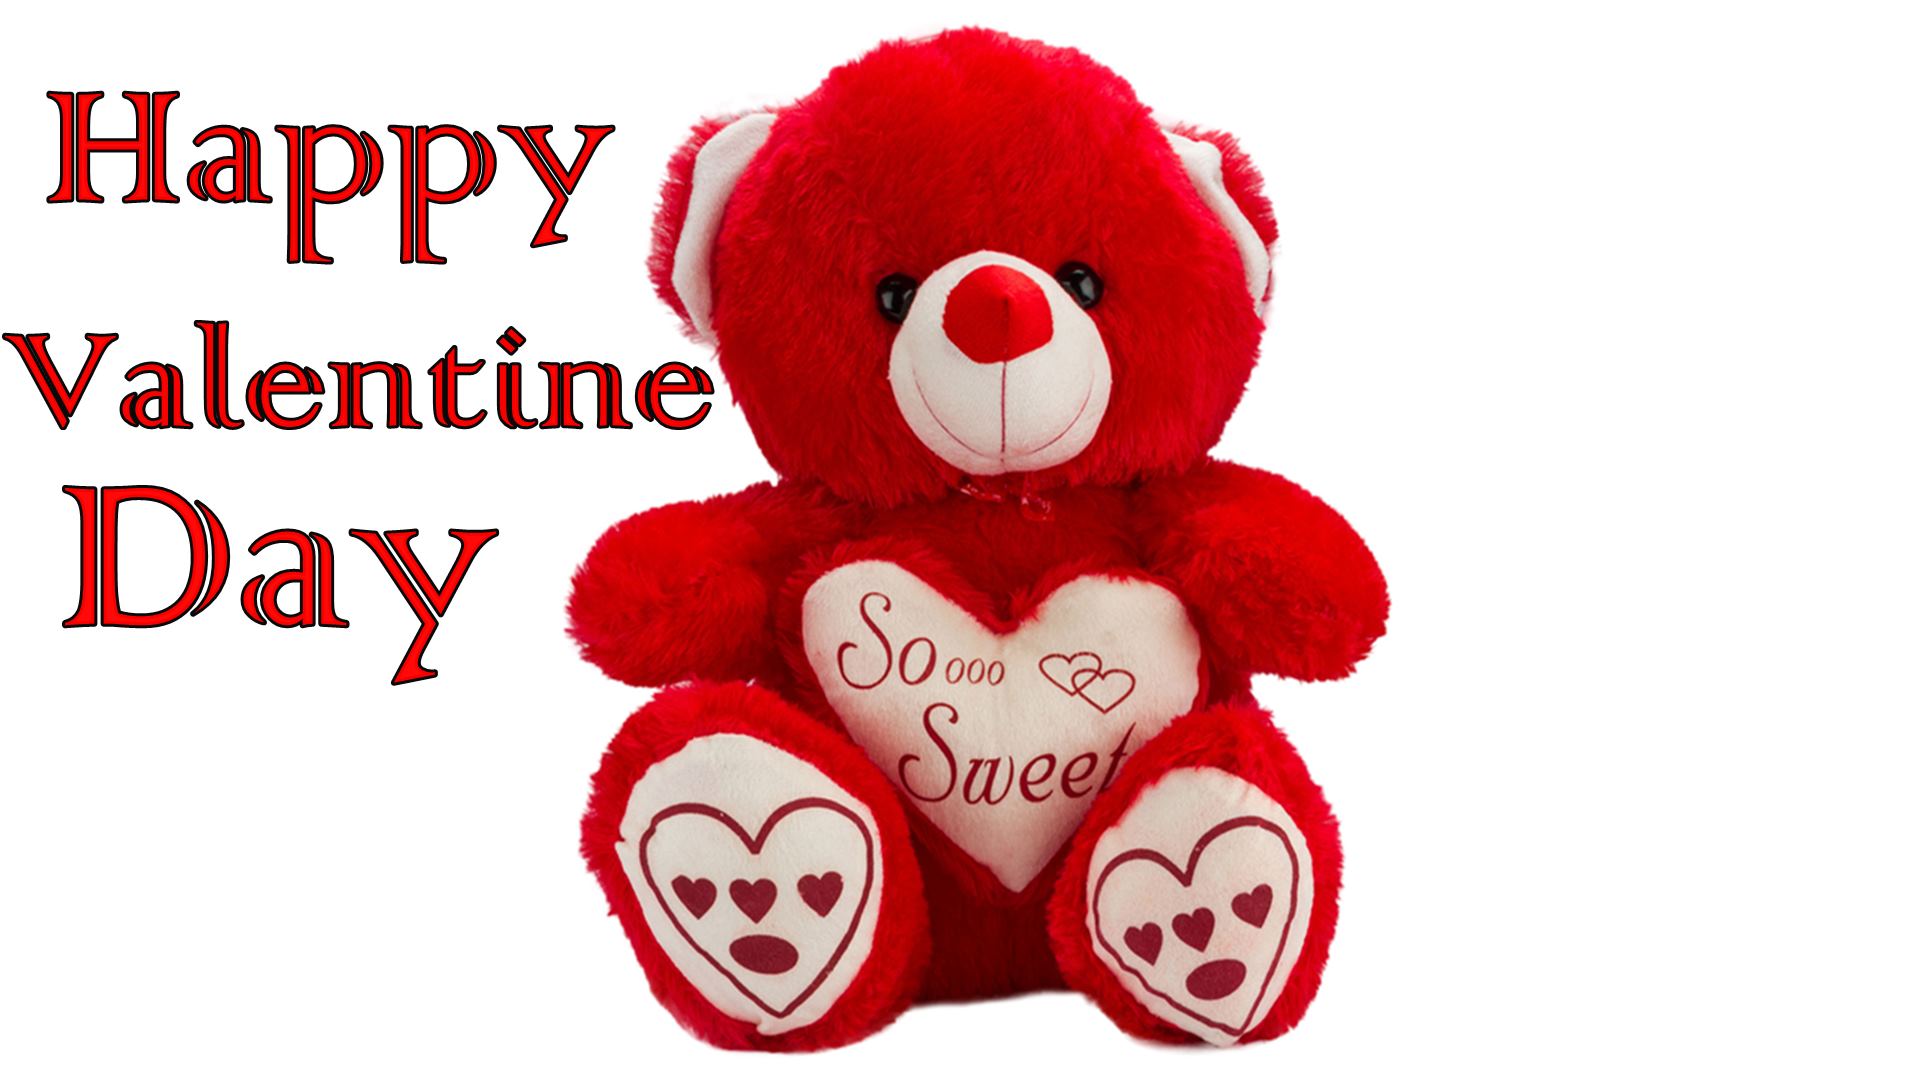 Teddy Bear Fiancee Wishing Valentine 2016 Images